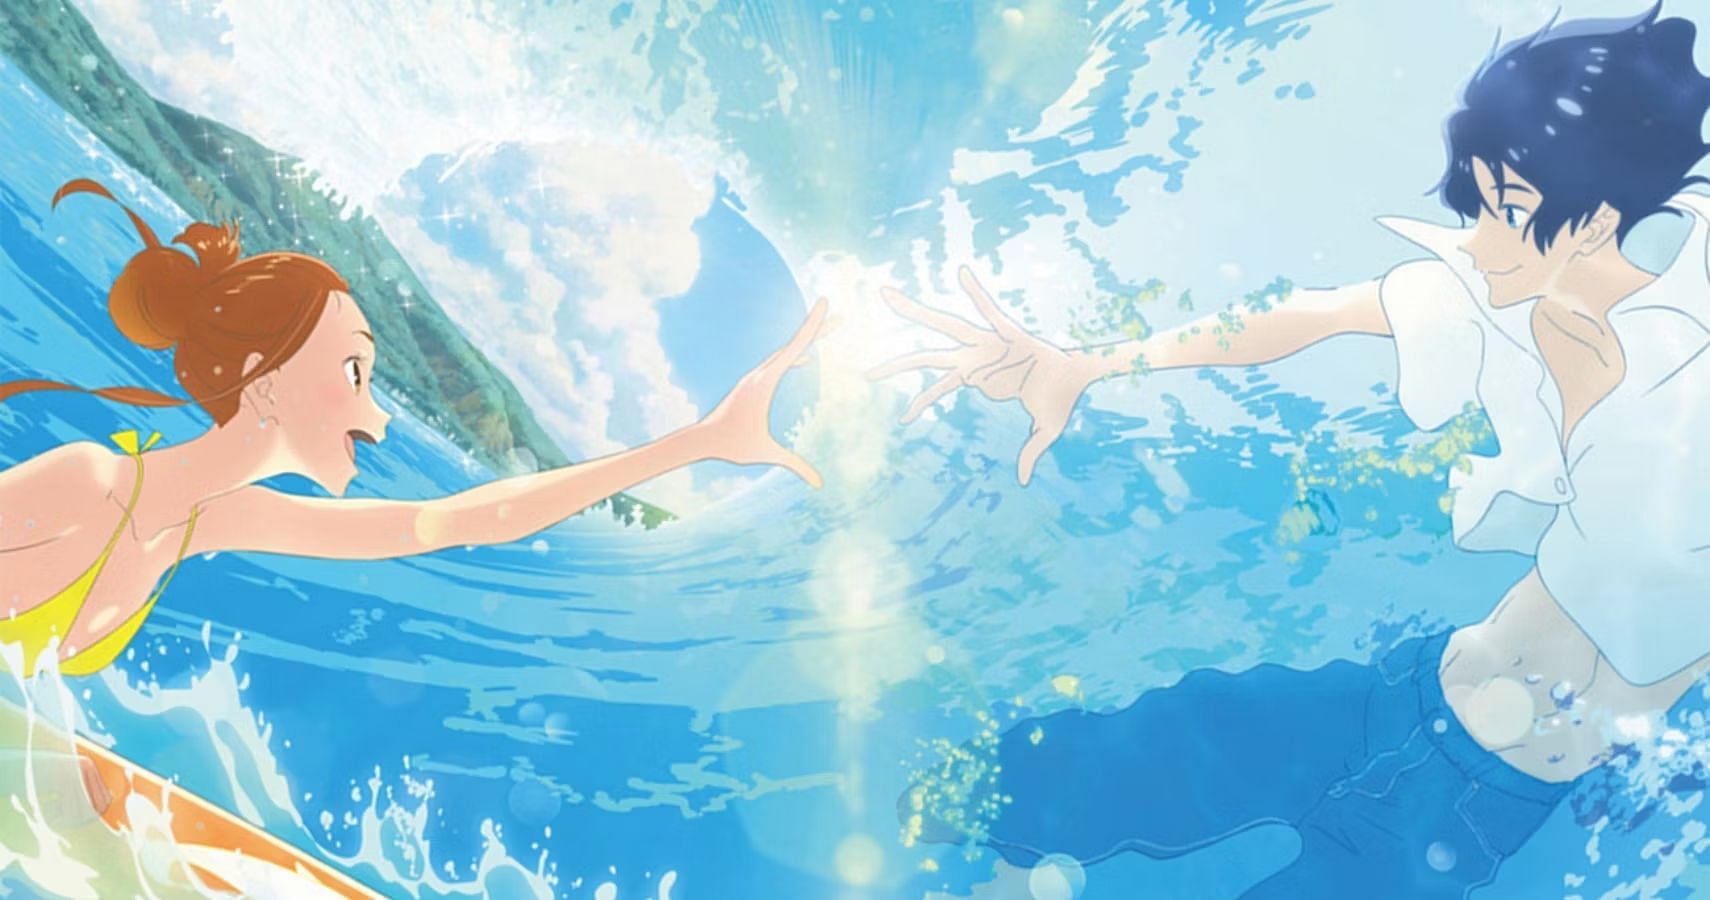 Ride Your Wave anime(image via Studio Science SARU)